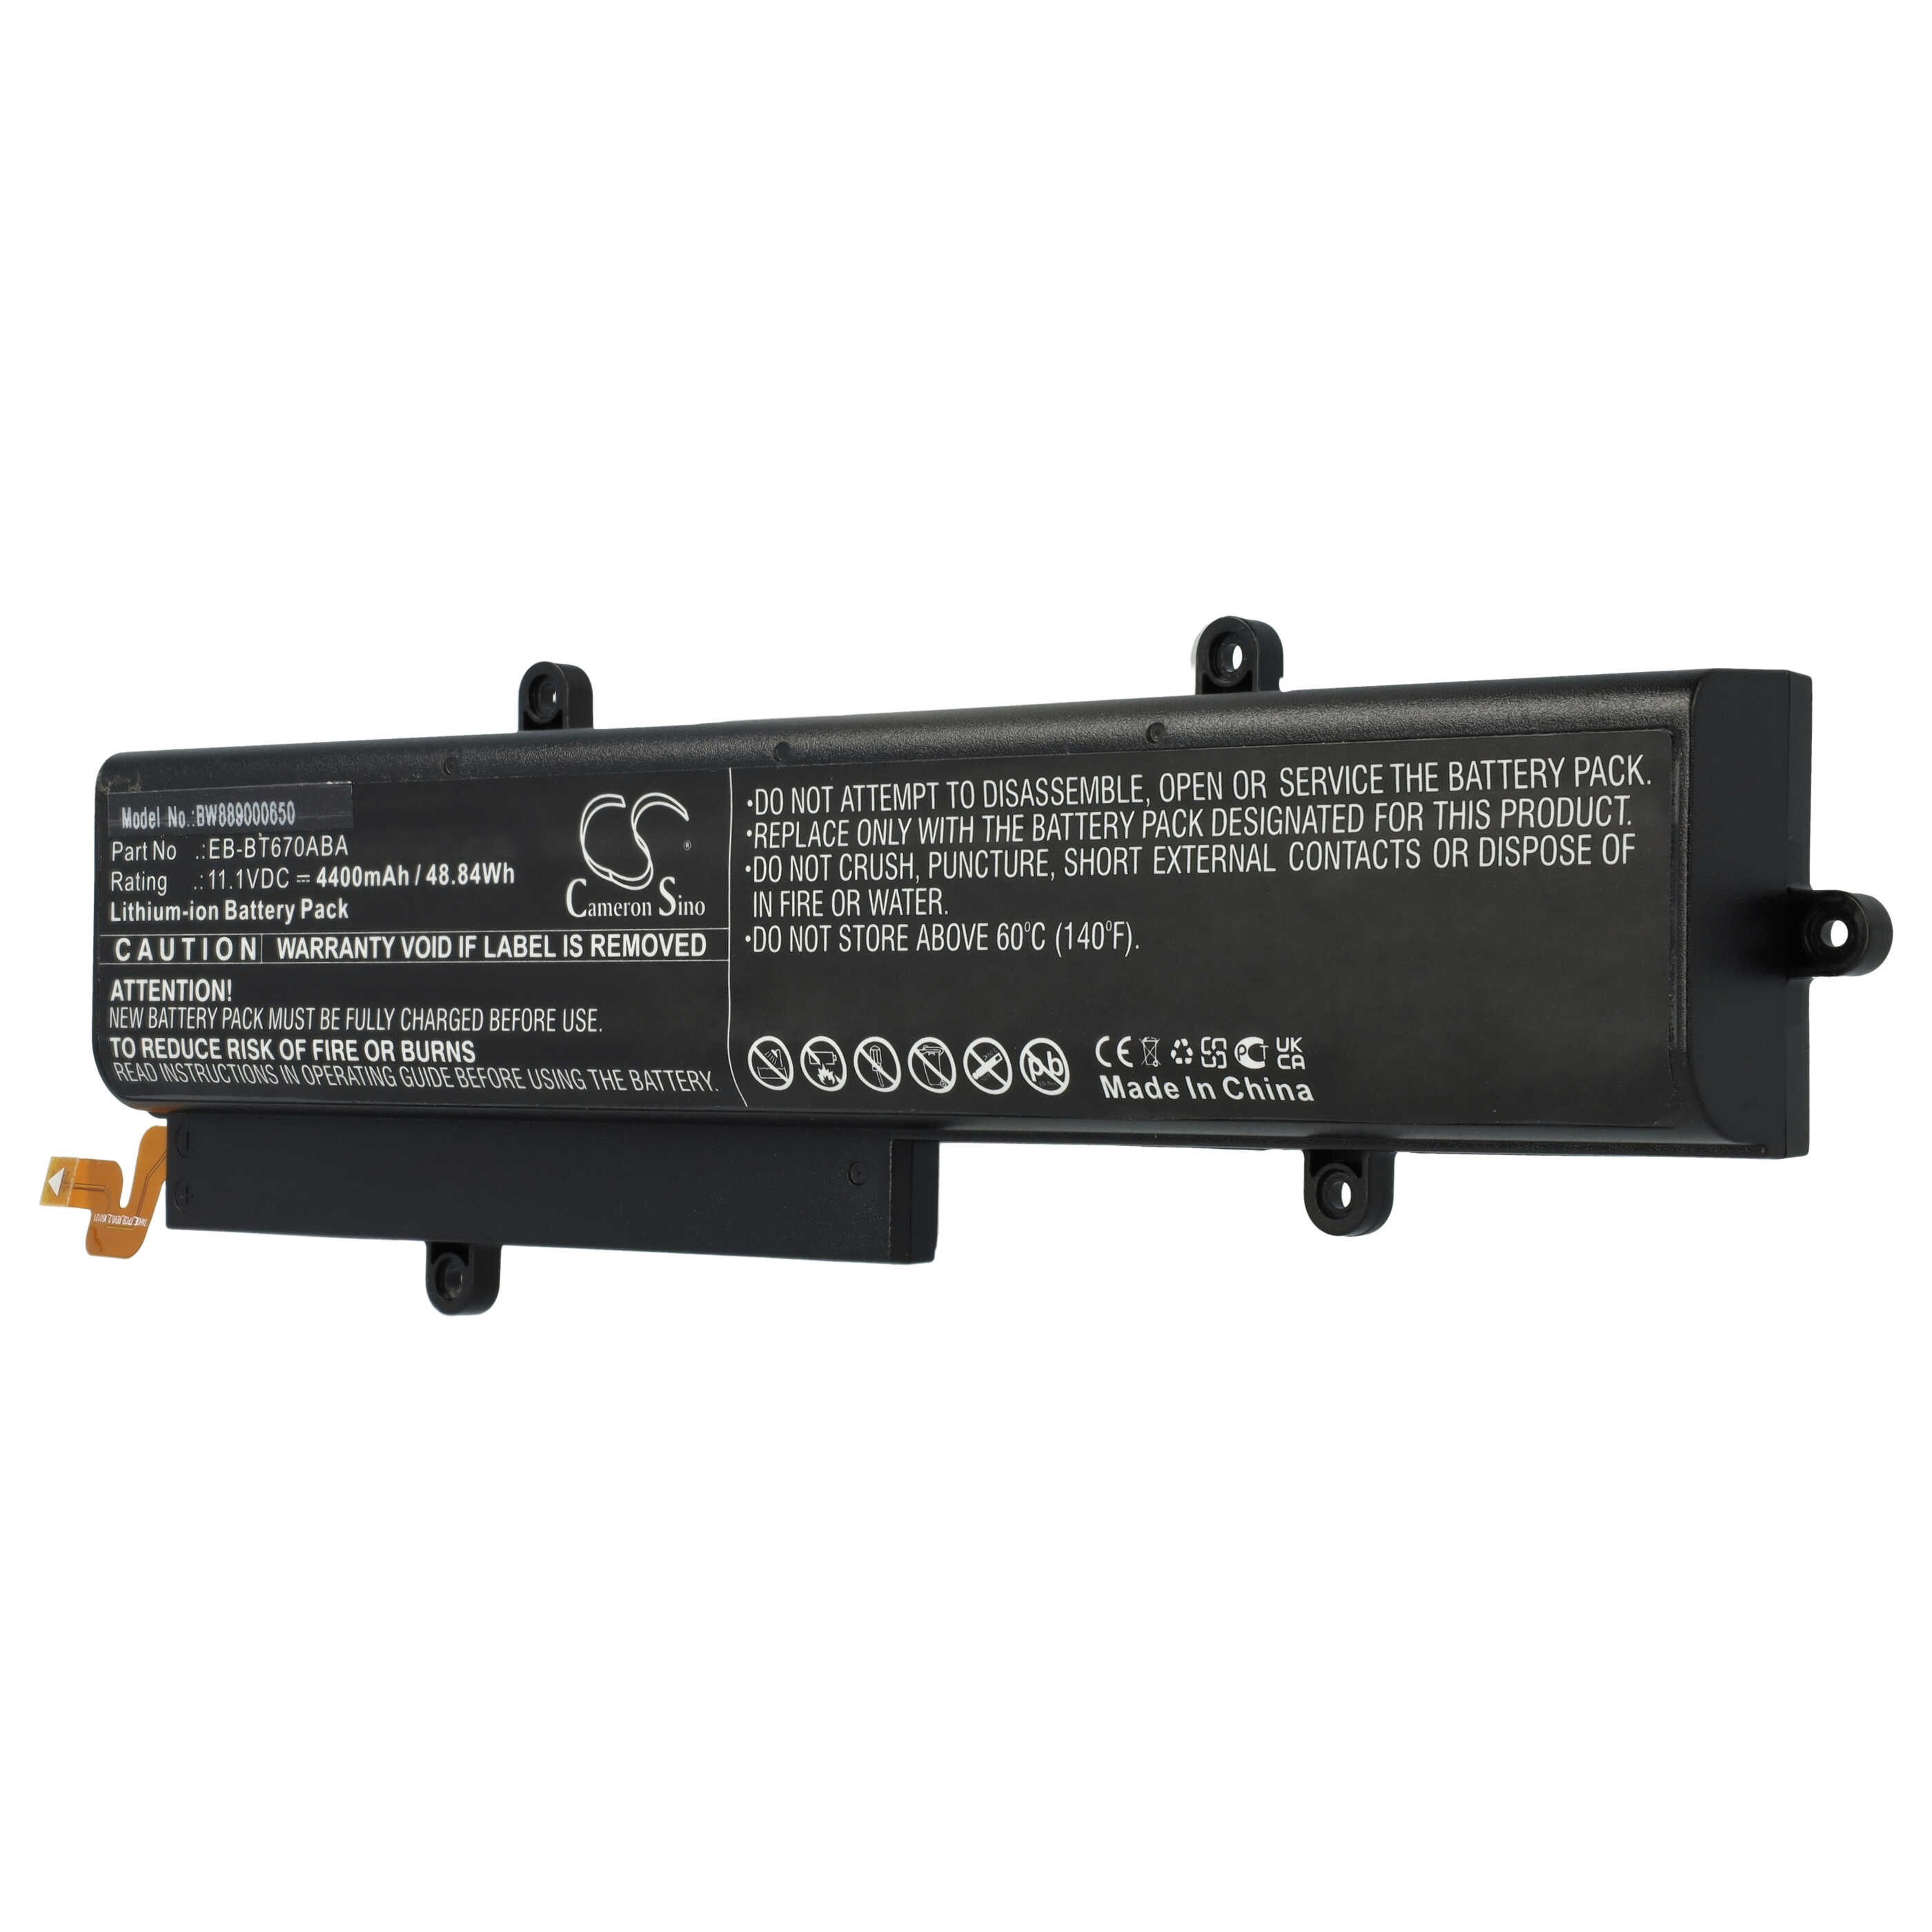 Akumulator zamiennik Samsung AA1GA12BS, EB-BT670ABA - 4400 mAh 11,1 V Li-Ion